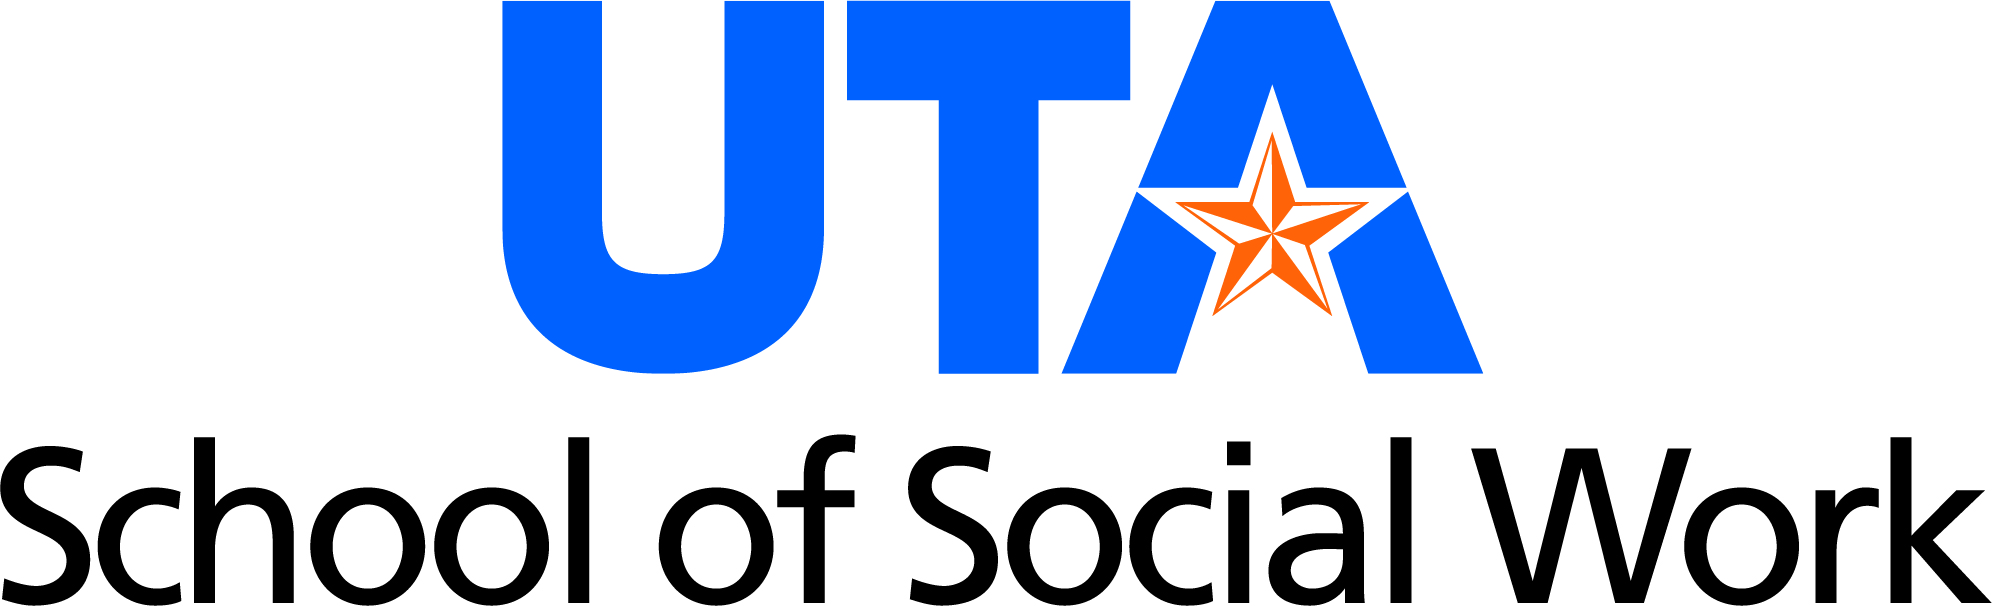 UTA School of Social Work